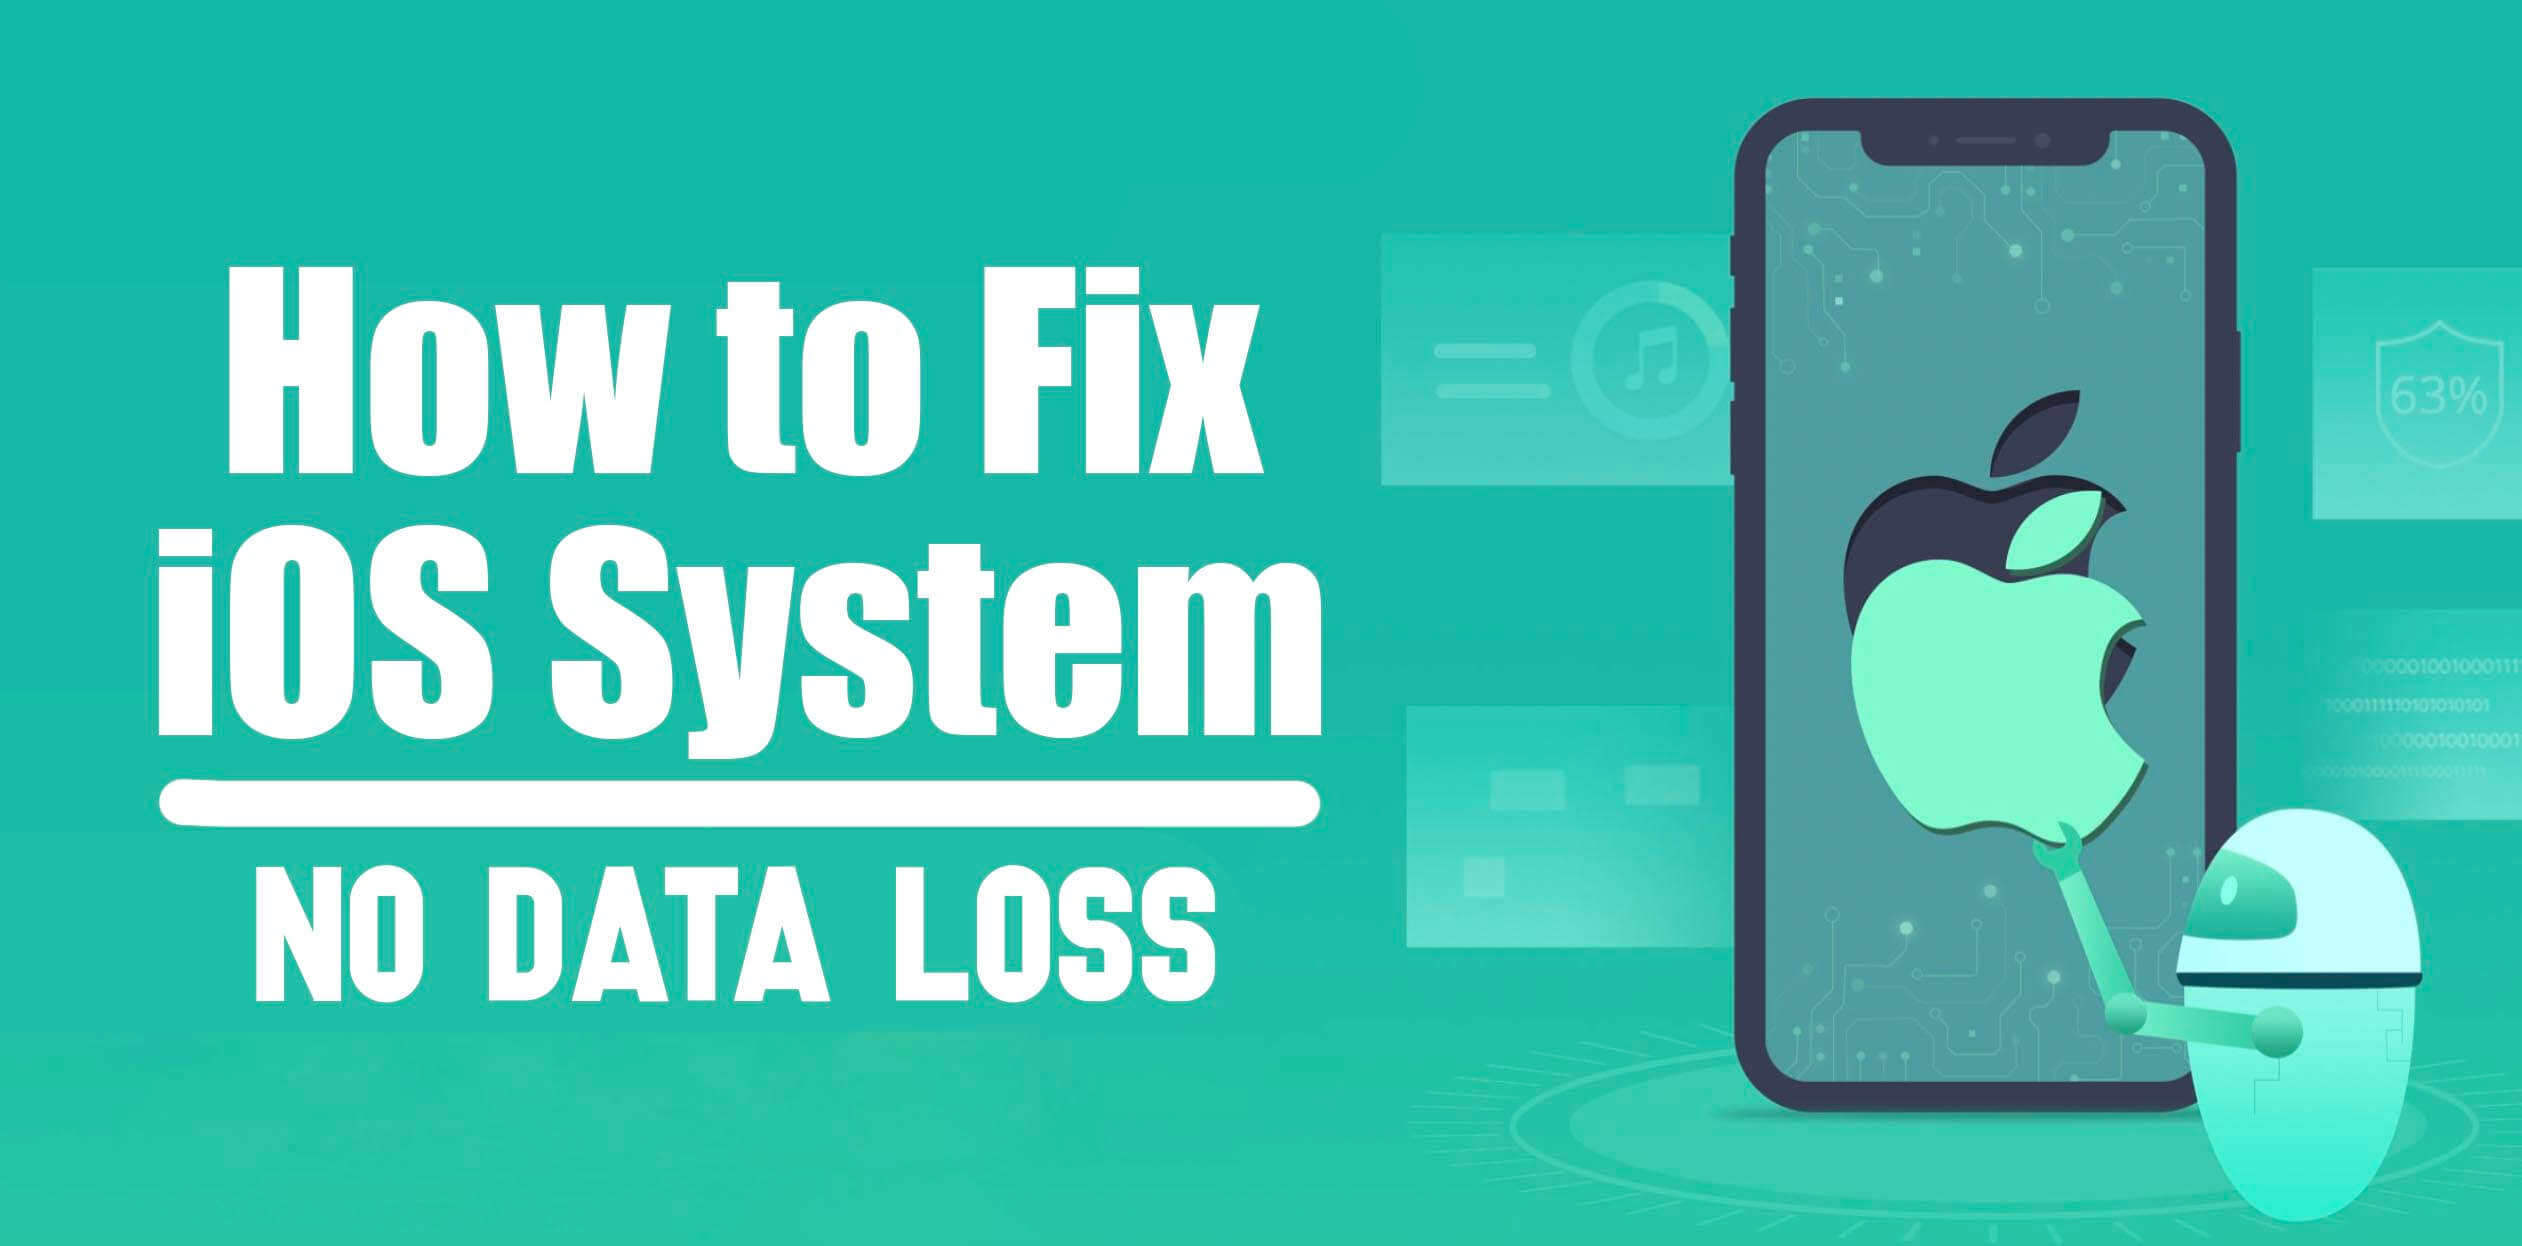 How to Fix iOS System (No Data Loss) - Joyoshare UltFix